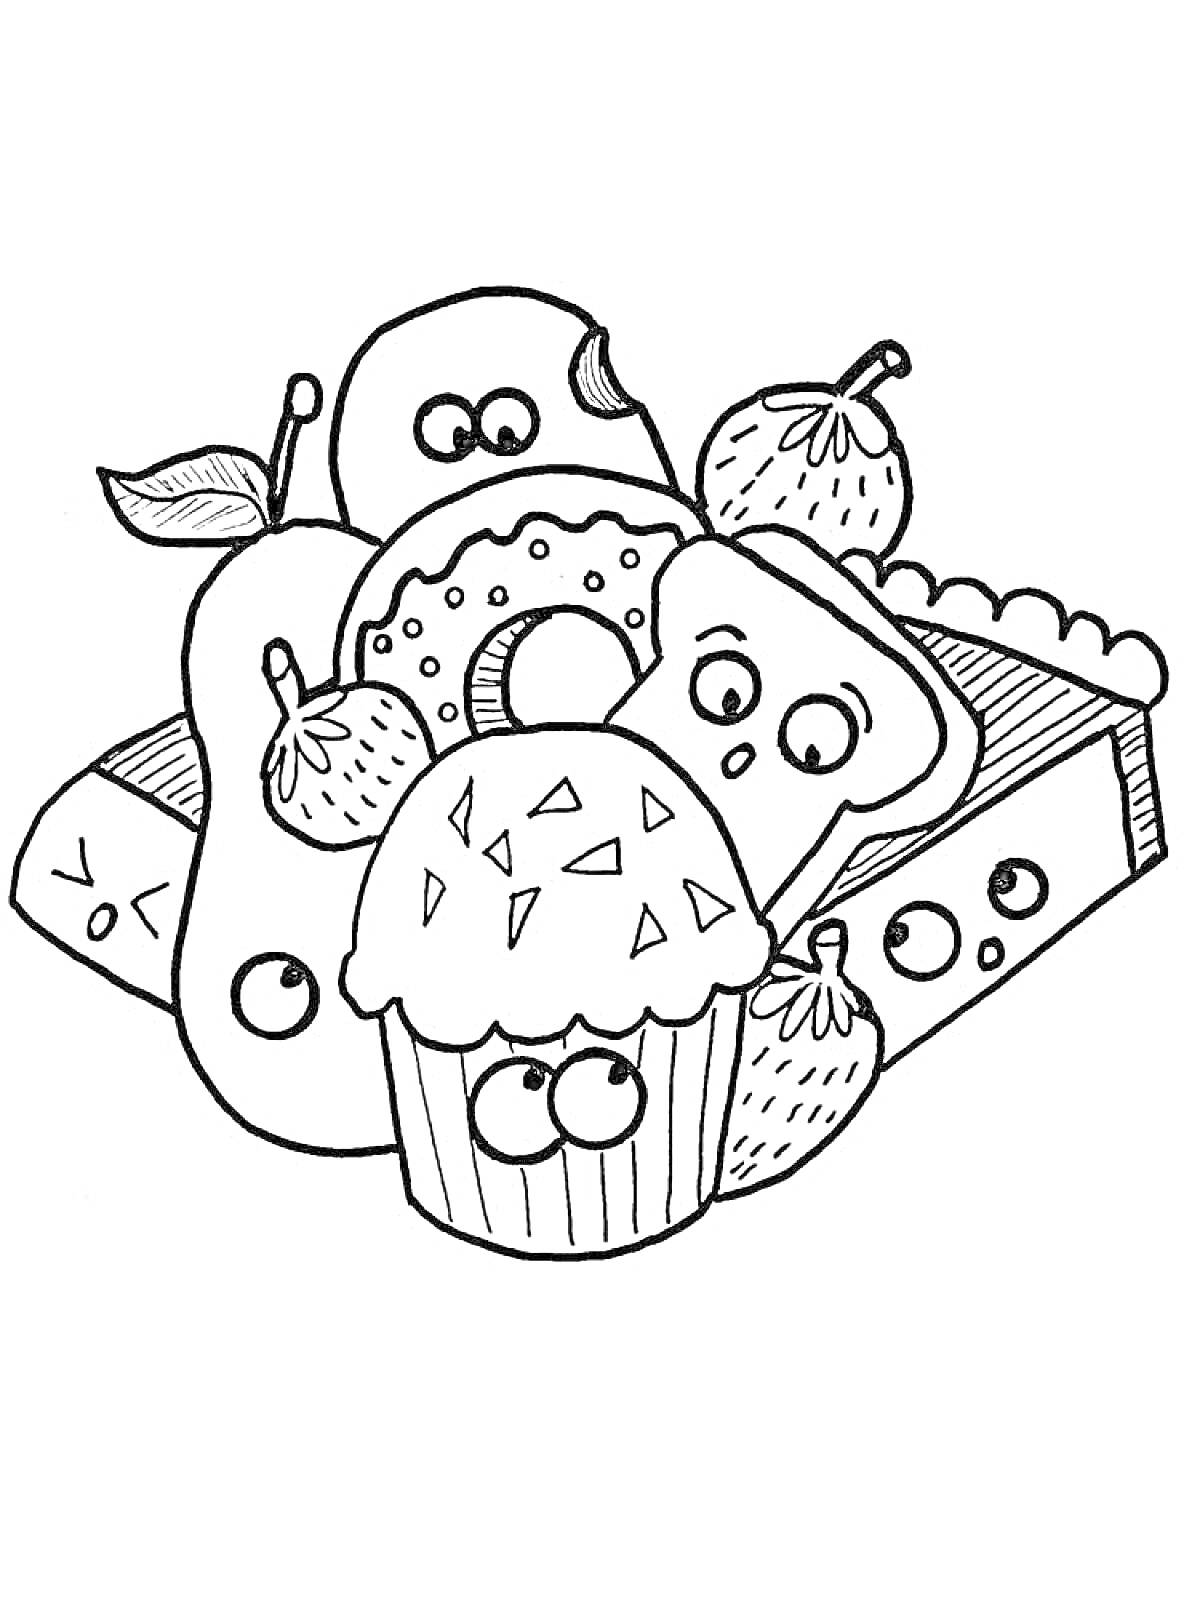 Пирог, кекс, пончик, тост, грушa и клубника с лицами